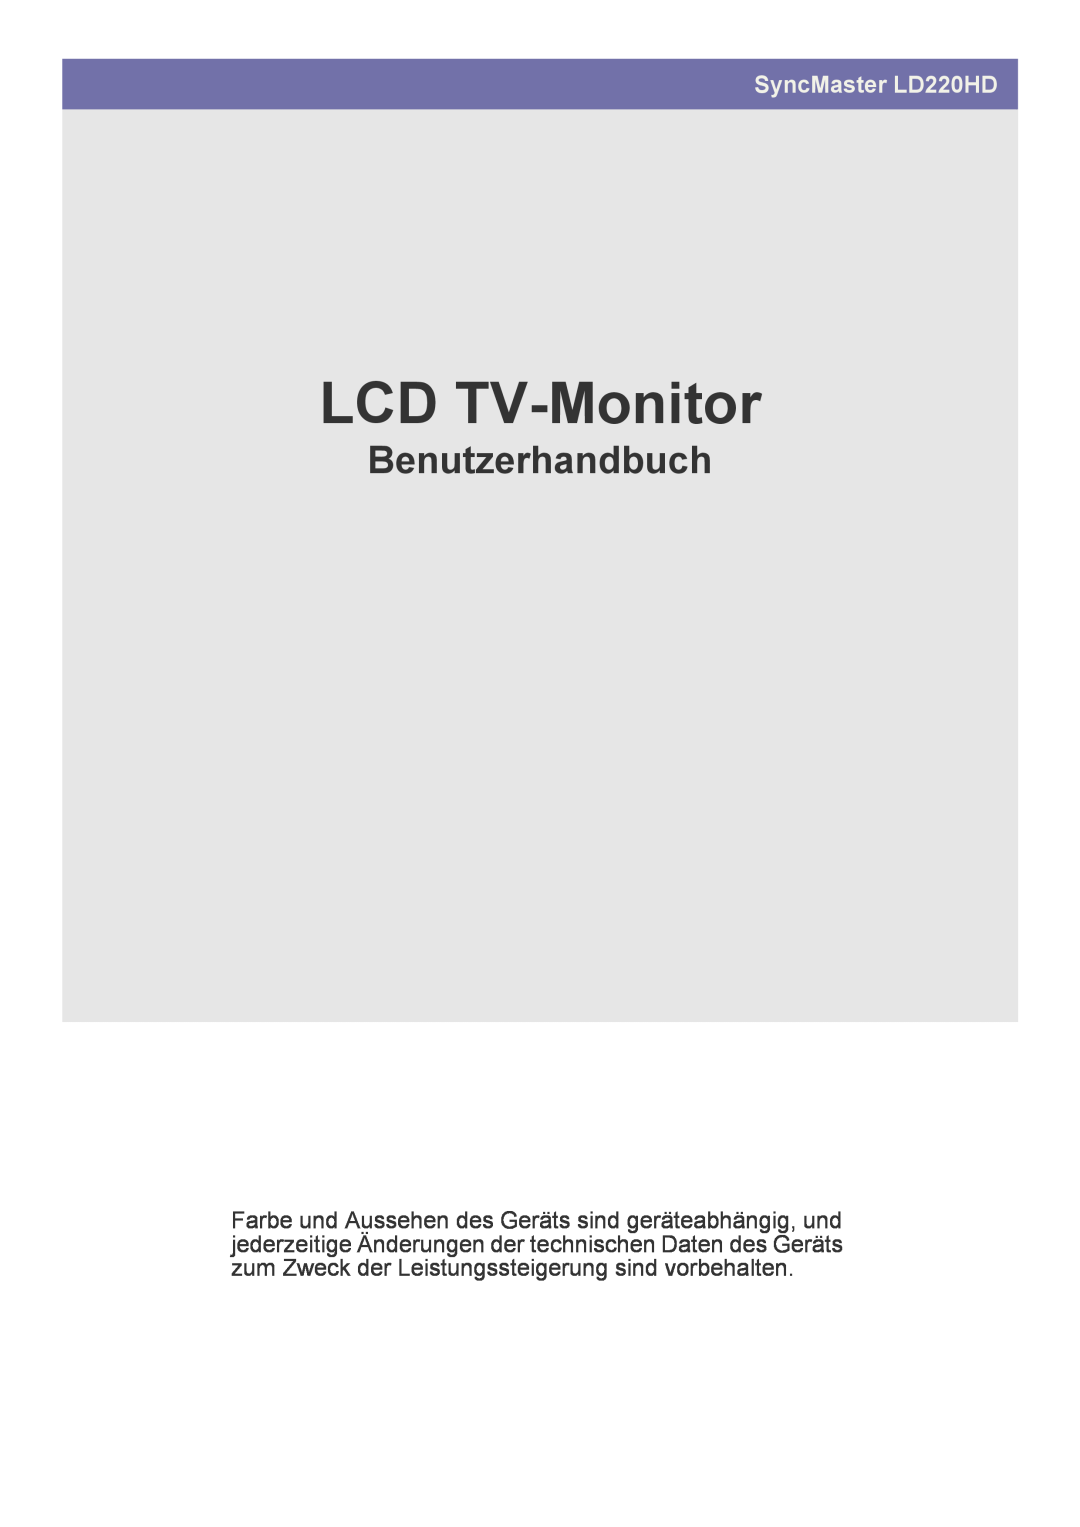 Samsung LS22FMDGF/EN manual LCD TV Монитор, Руководство пользователя, SyncMaster LD220HD 